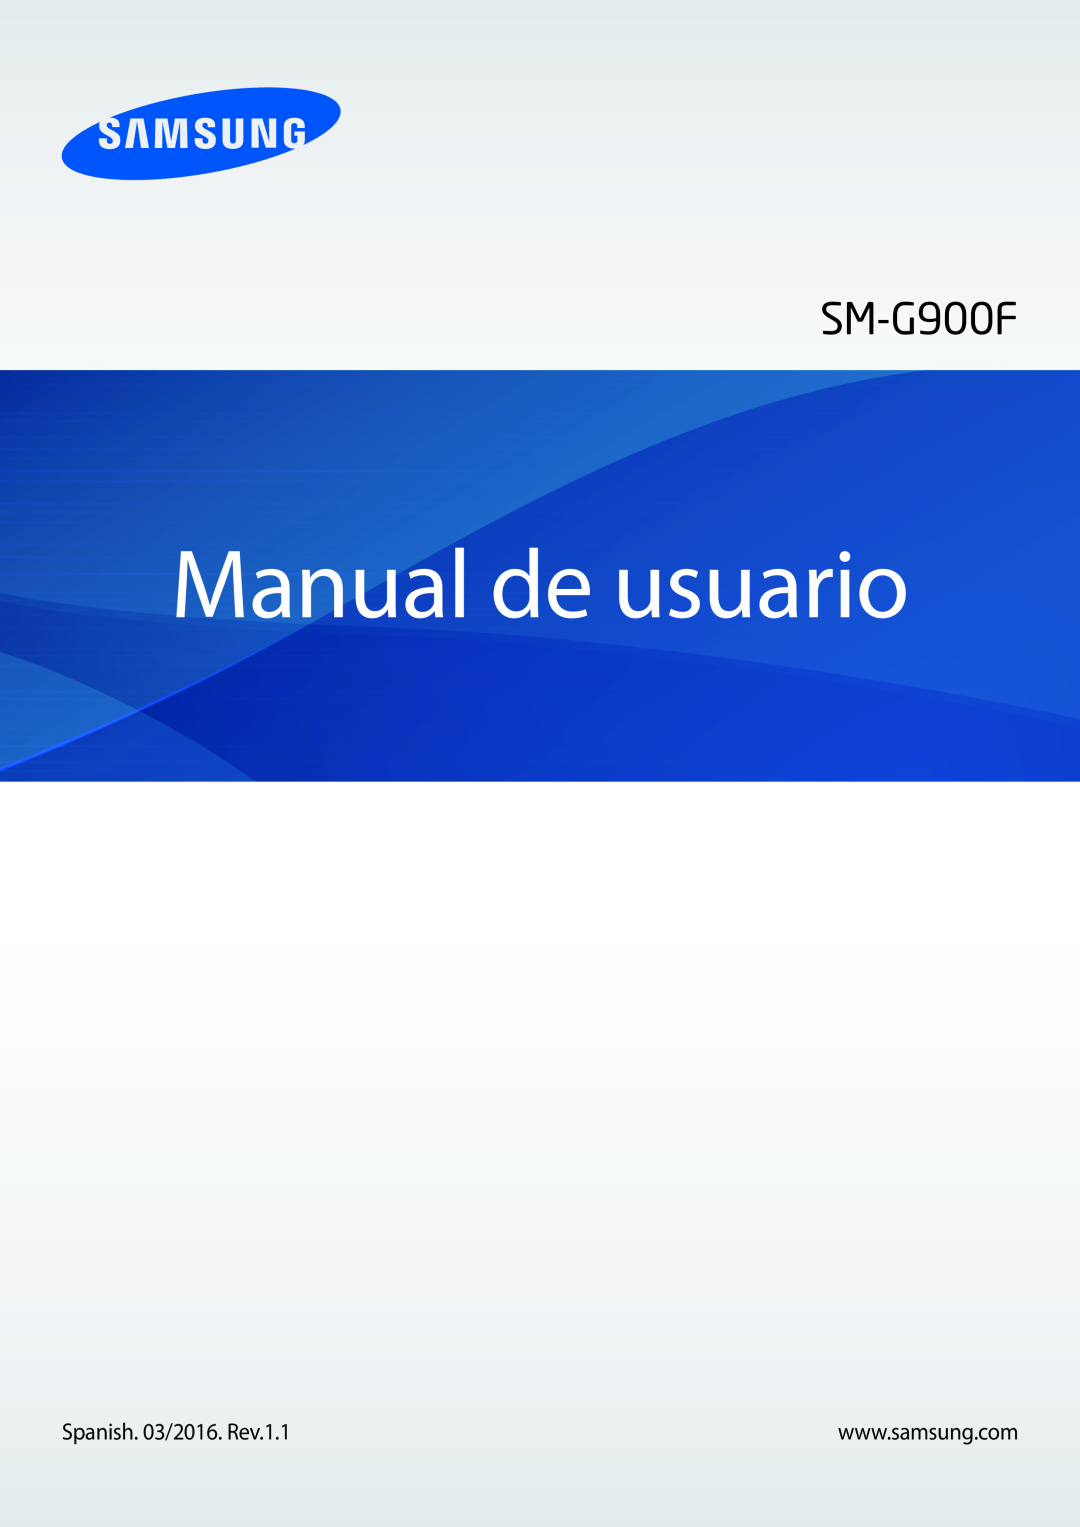 Samsung SM-G900FZWADBT, SM-G900FZKADBT, SM-G900FZDADBT, SM-G900FZKAFTM, SM-G900FZWESWC manual Manuale dellutente 